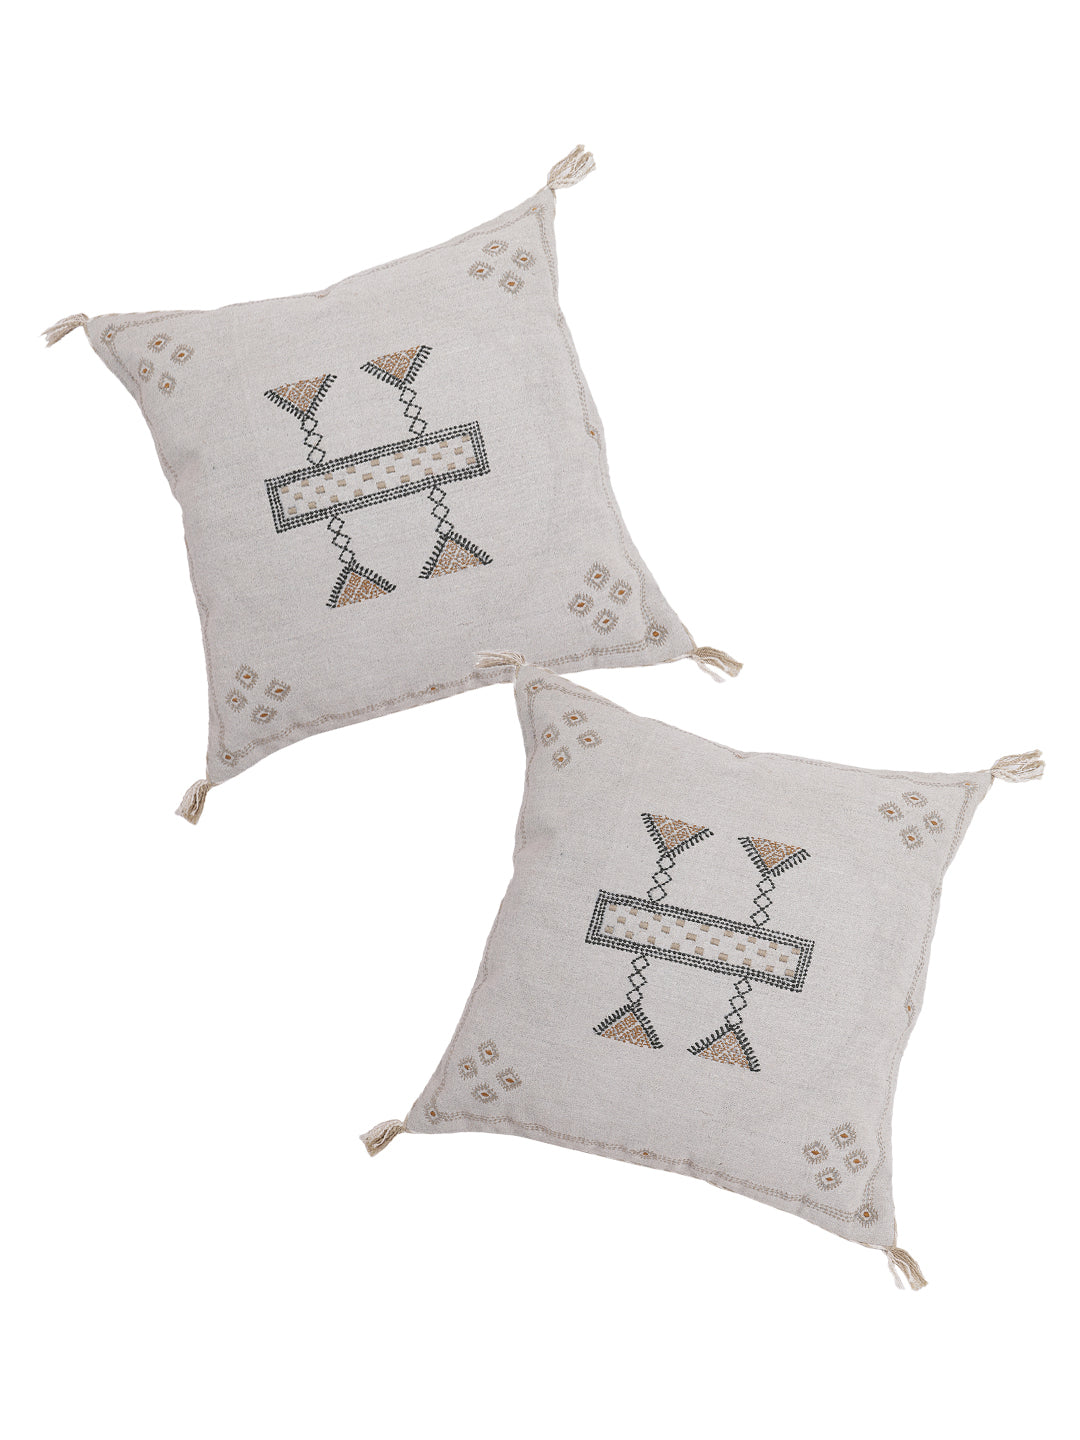 Set of 2 Cactus Silk Inspired 20 X 20 Handmade Linen Pillow Cover